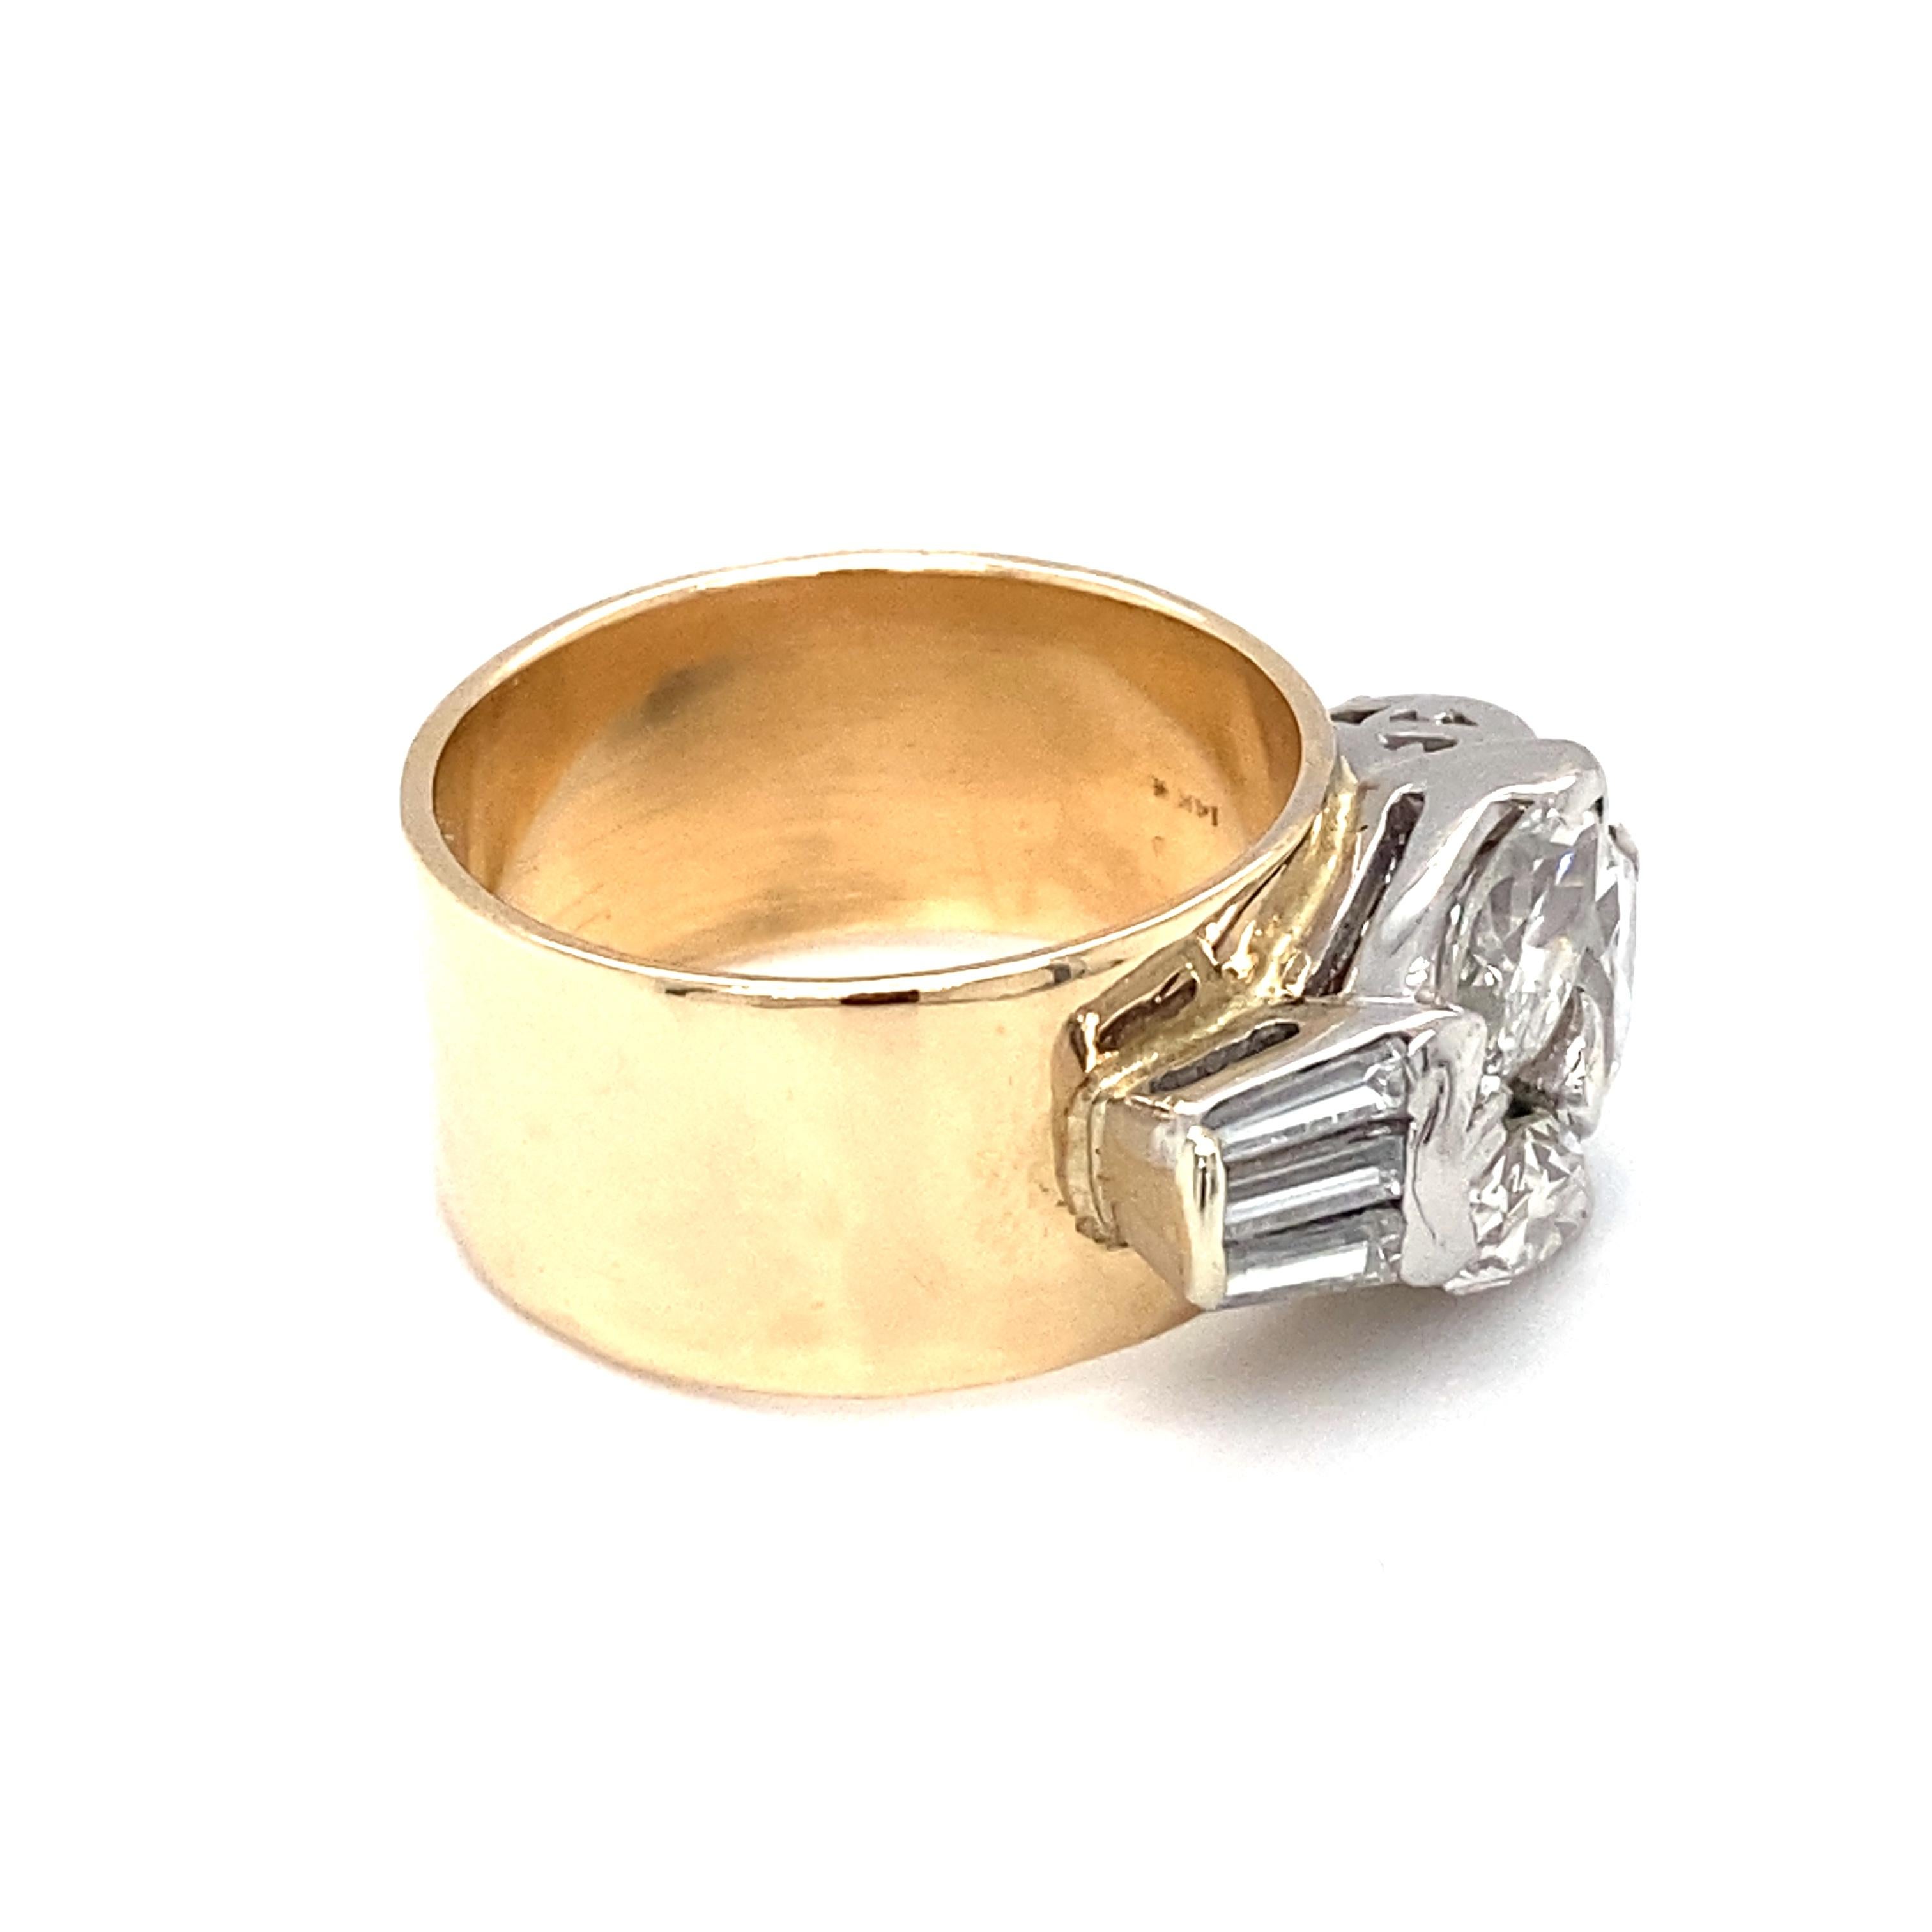 Marquise Cut Circa 1920s 2.32 Carat Diamond Ring in 14 Karat Two Tone Gold